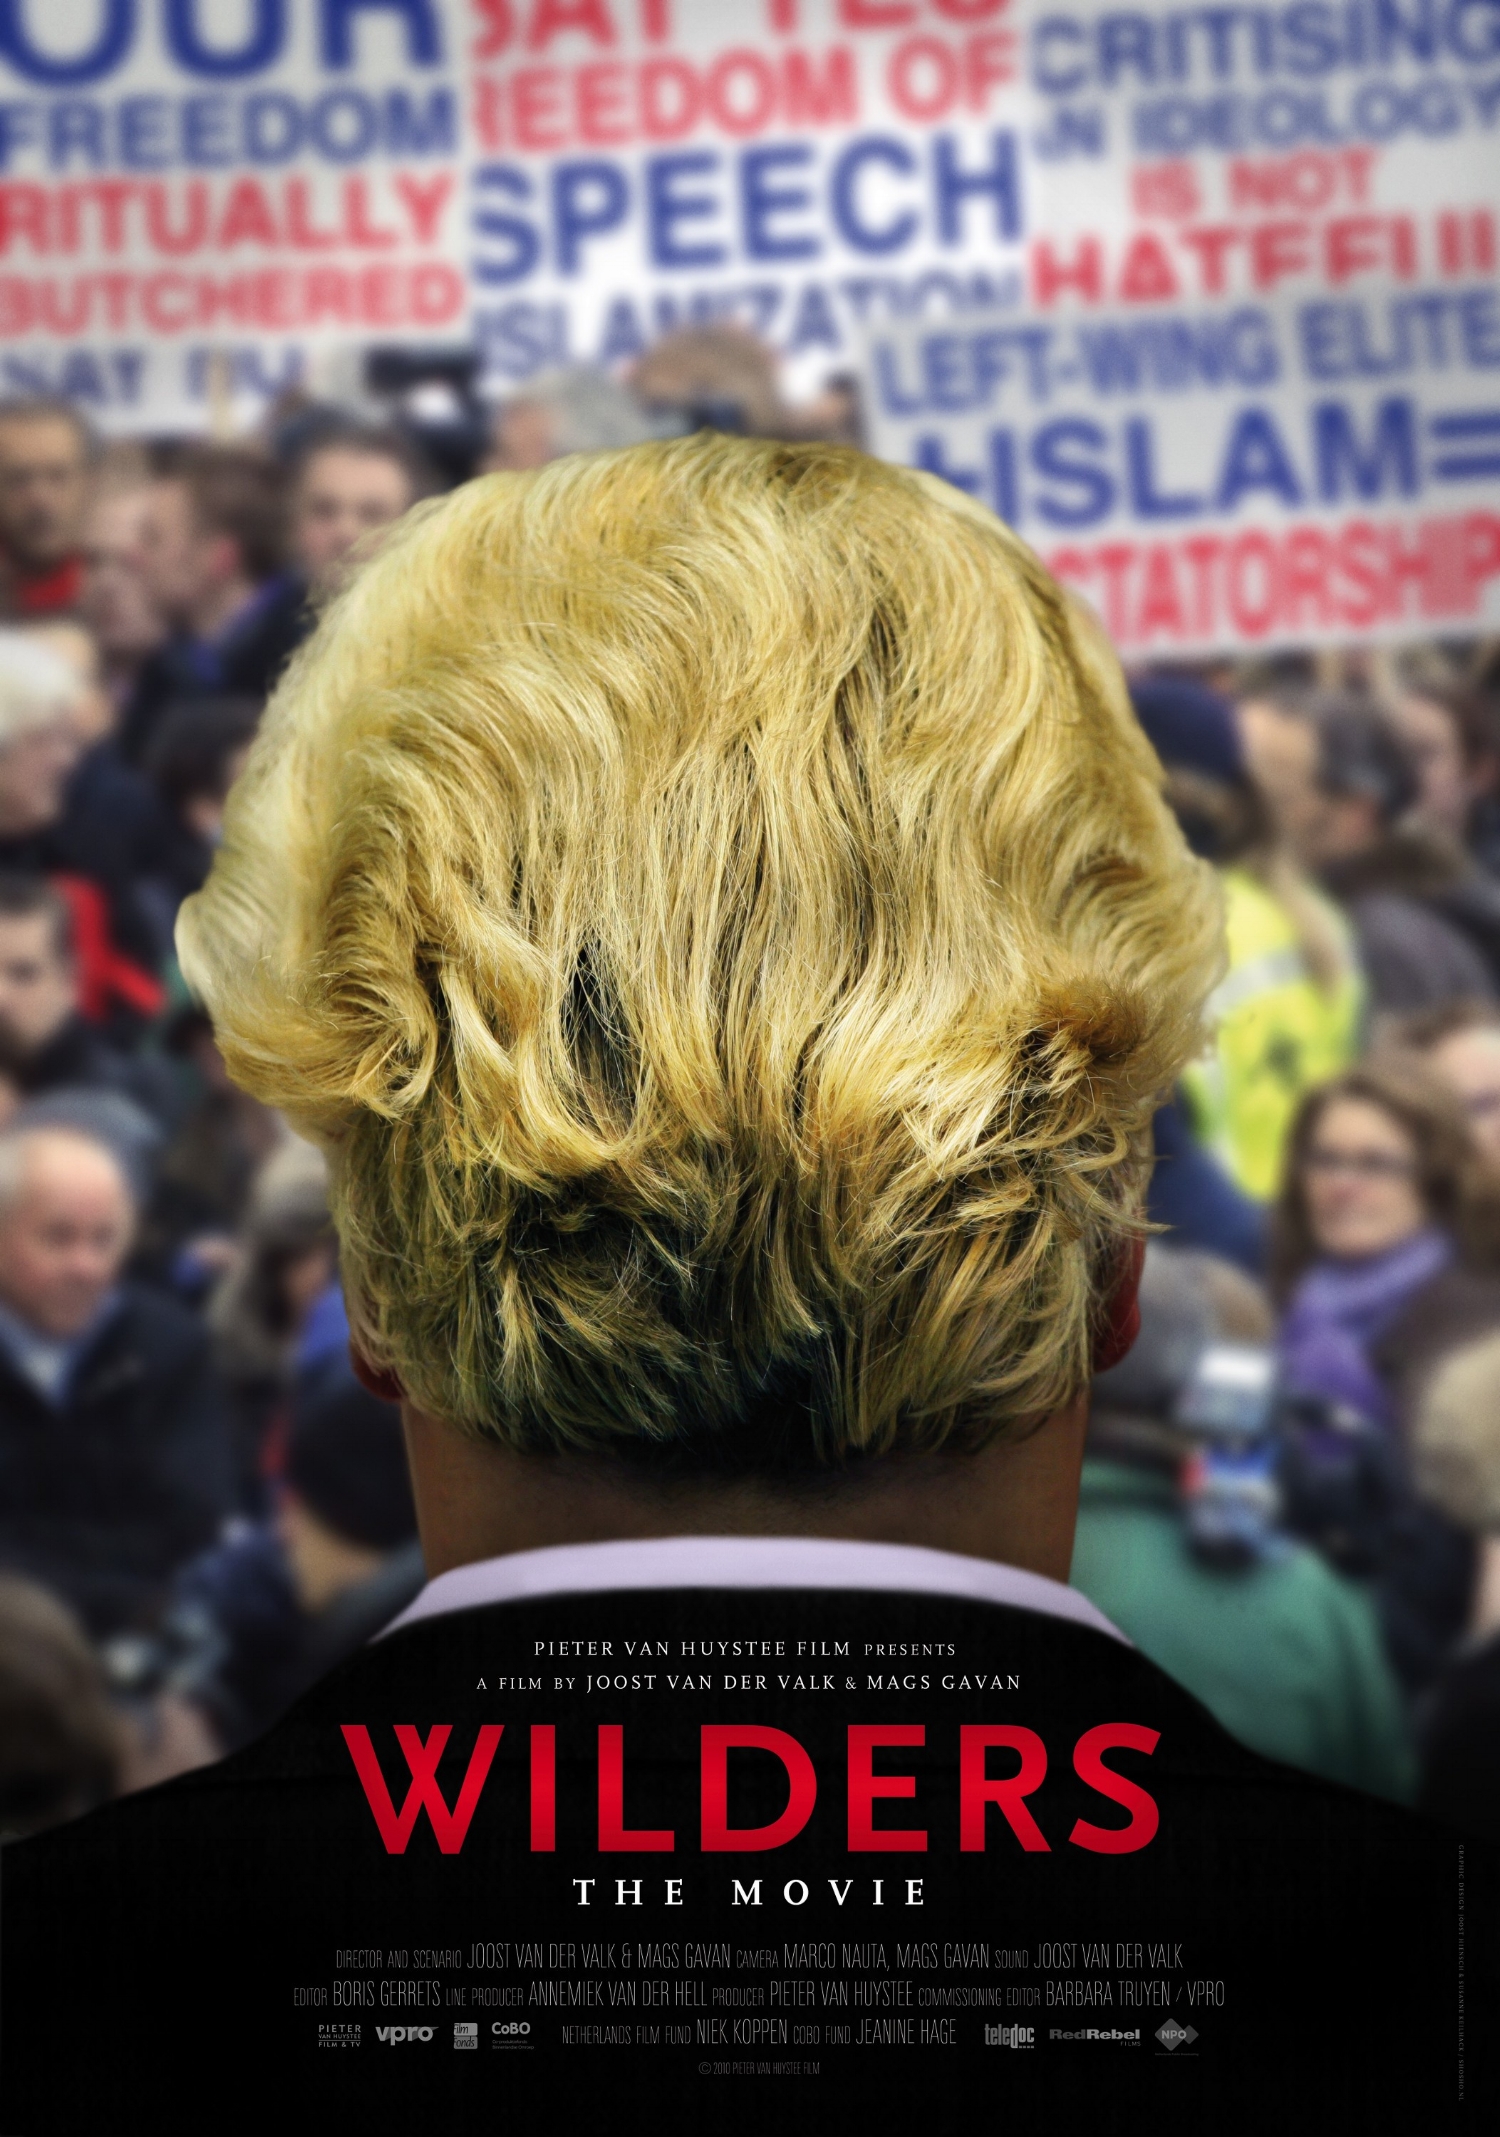 Wilders the Movie trailer